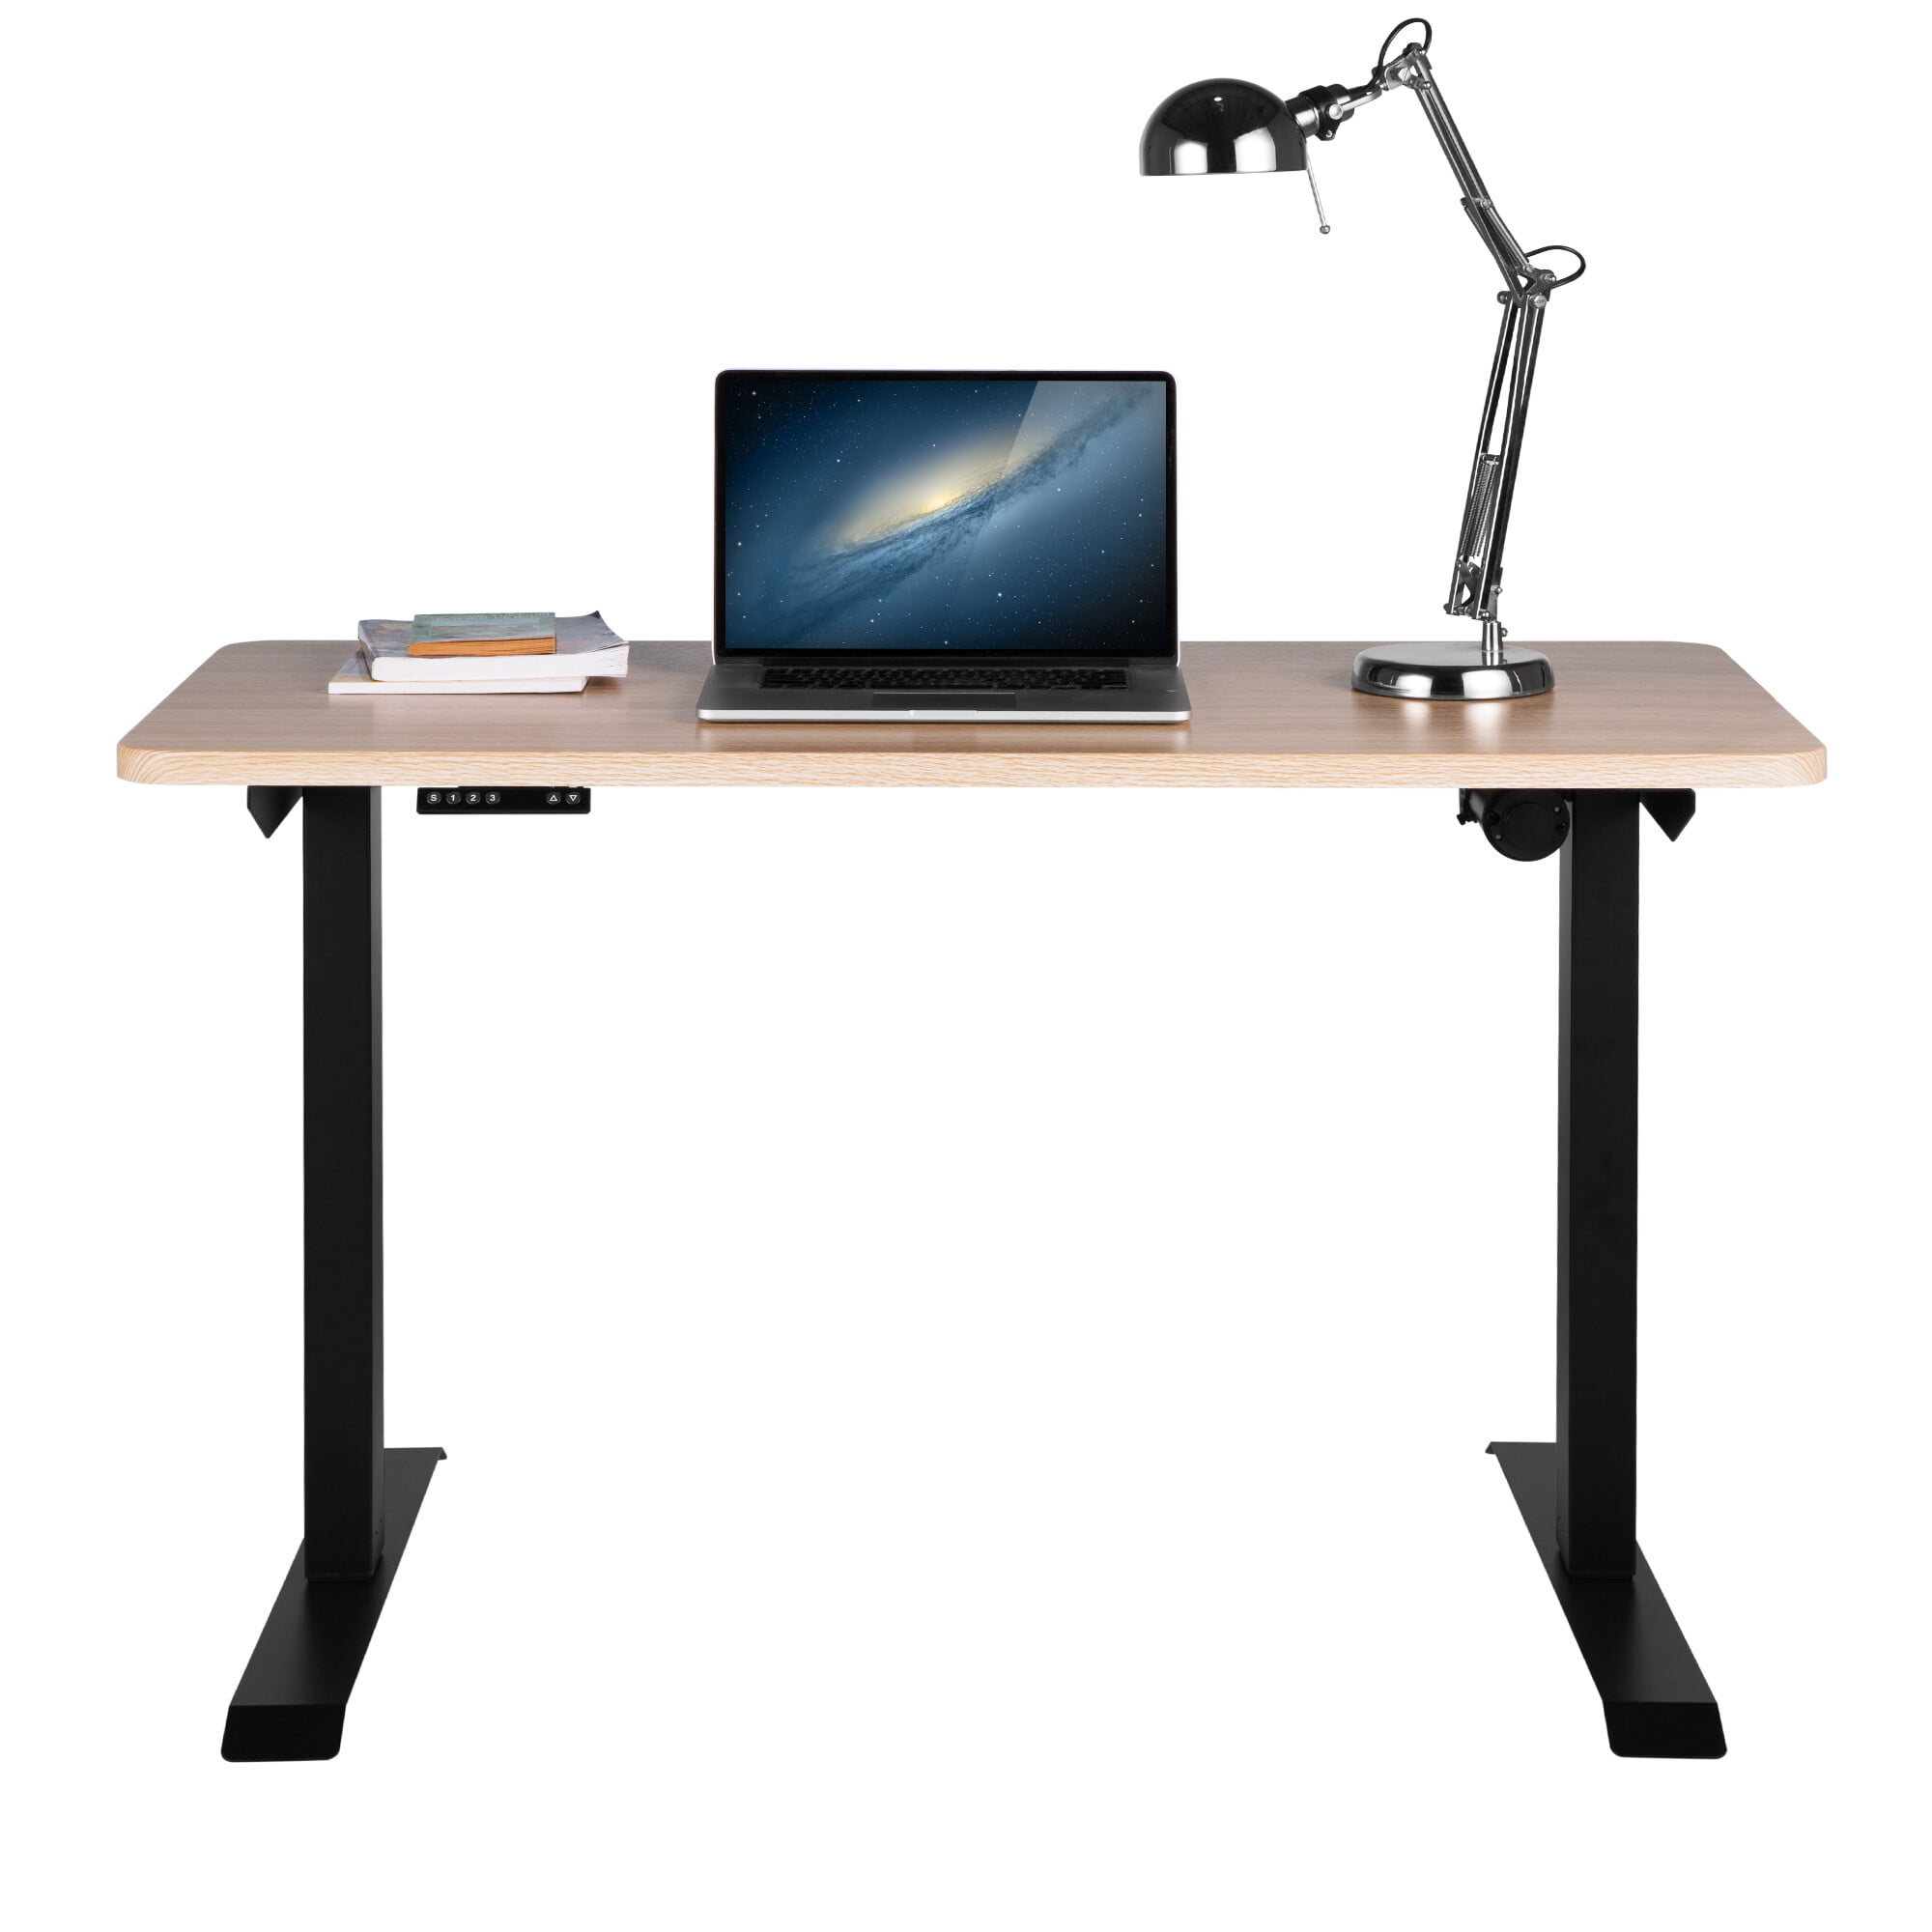 Masbekte Computer Desk Adjustable, Modern Office Furniture Standing Desk